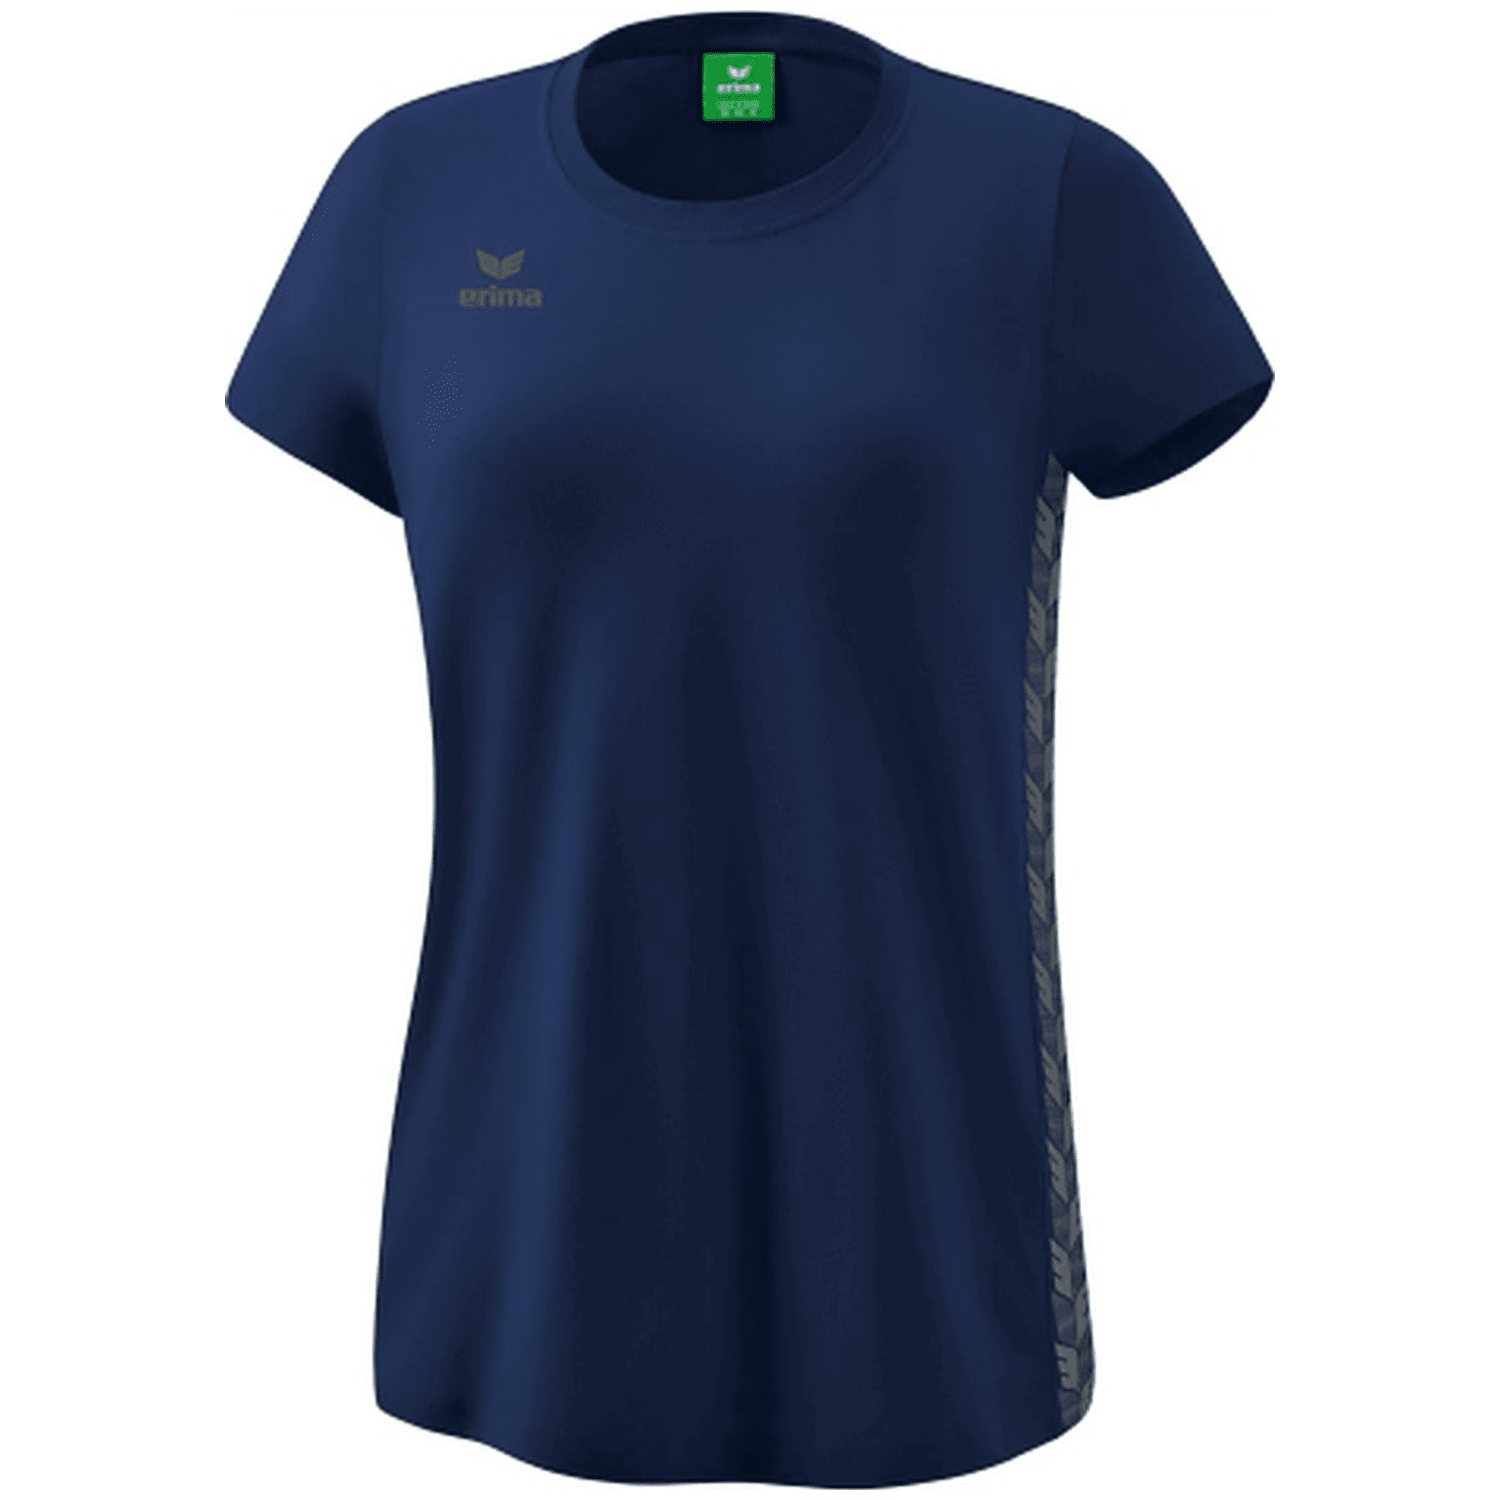 Erima Essential Team Damen T-Shirt